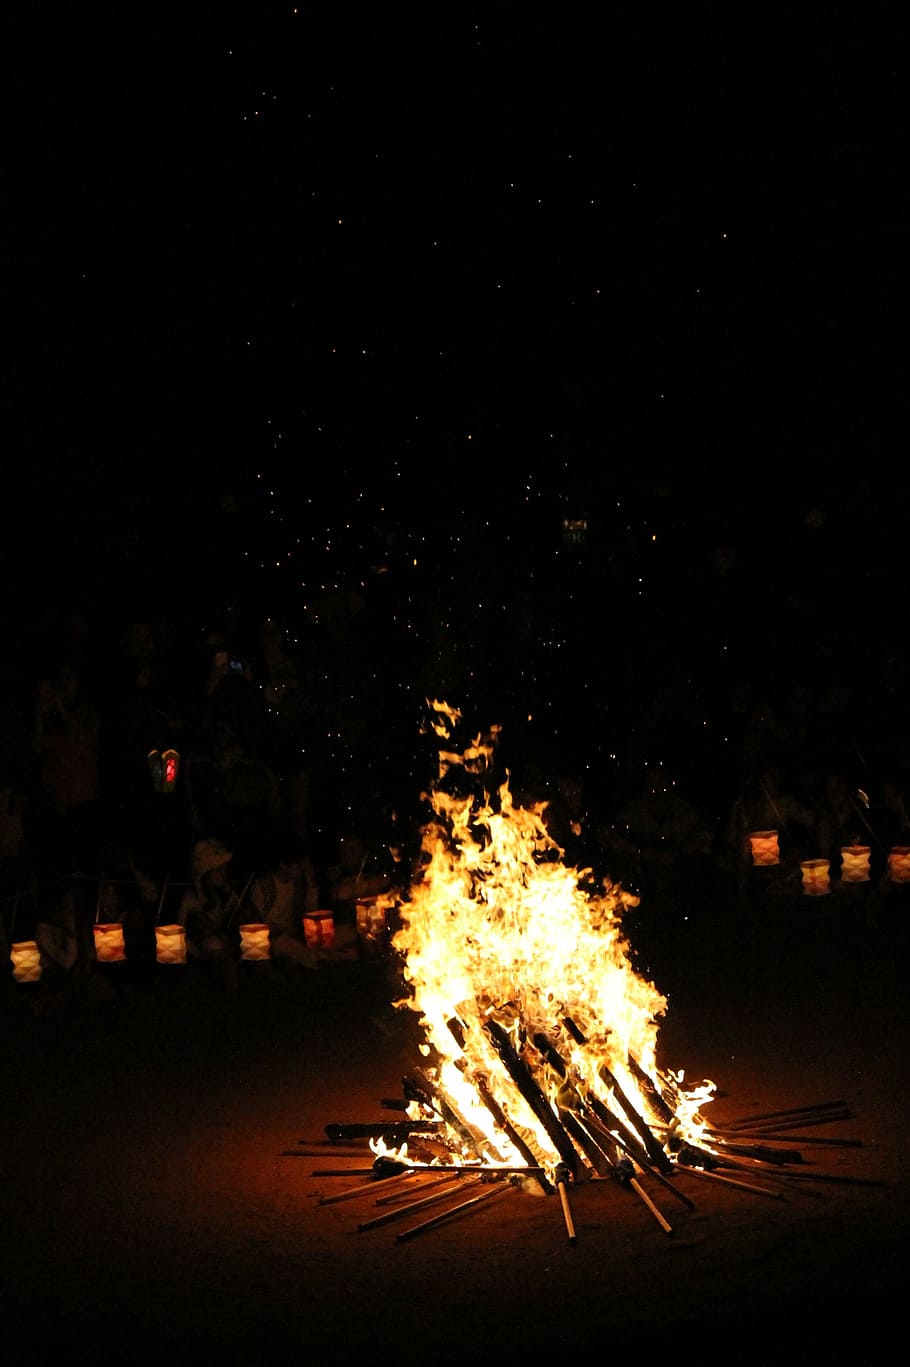 bonfire near lantern, st john, festa junina, celebration, the stake, night, burning, fire - natural phenomenon, flame, fire